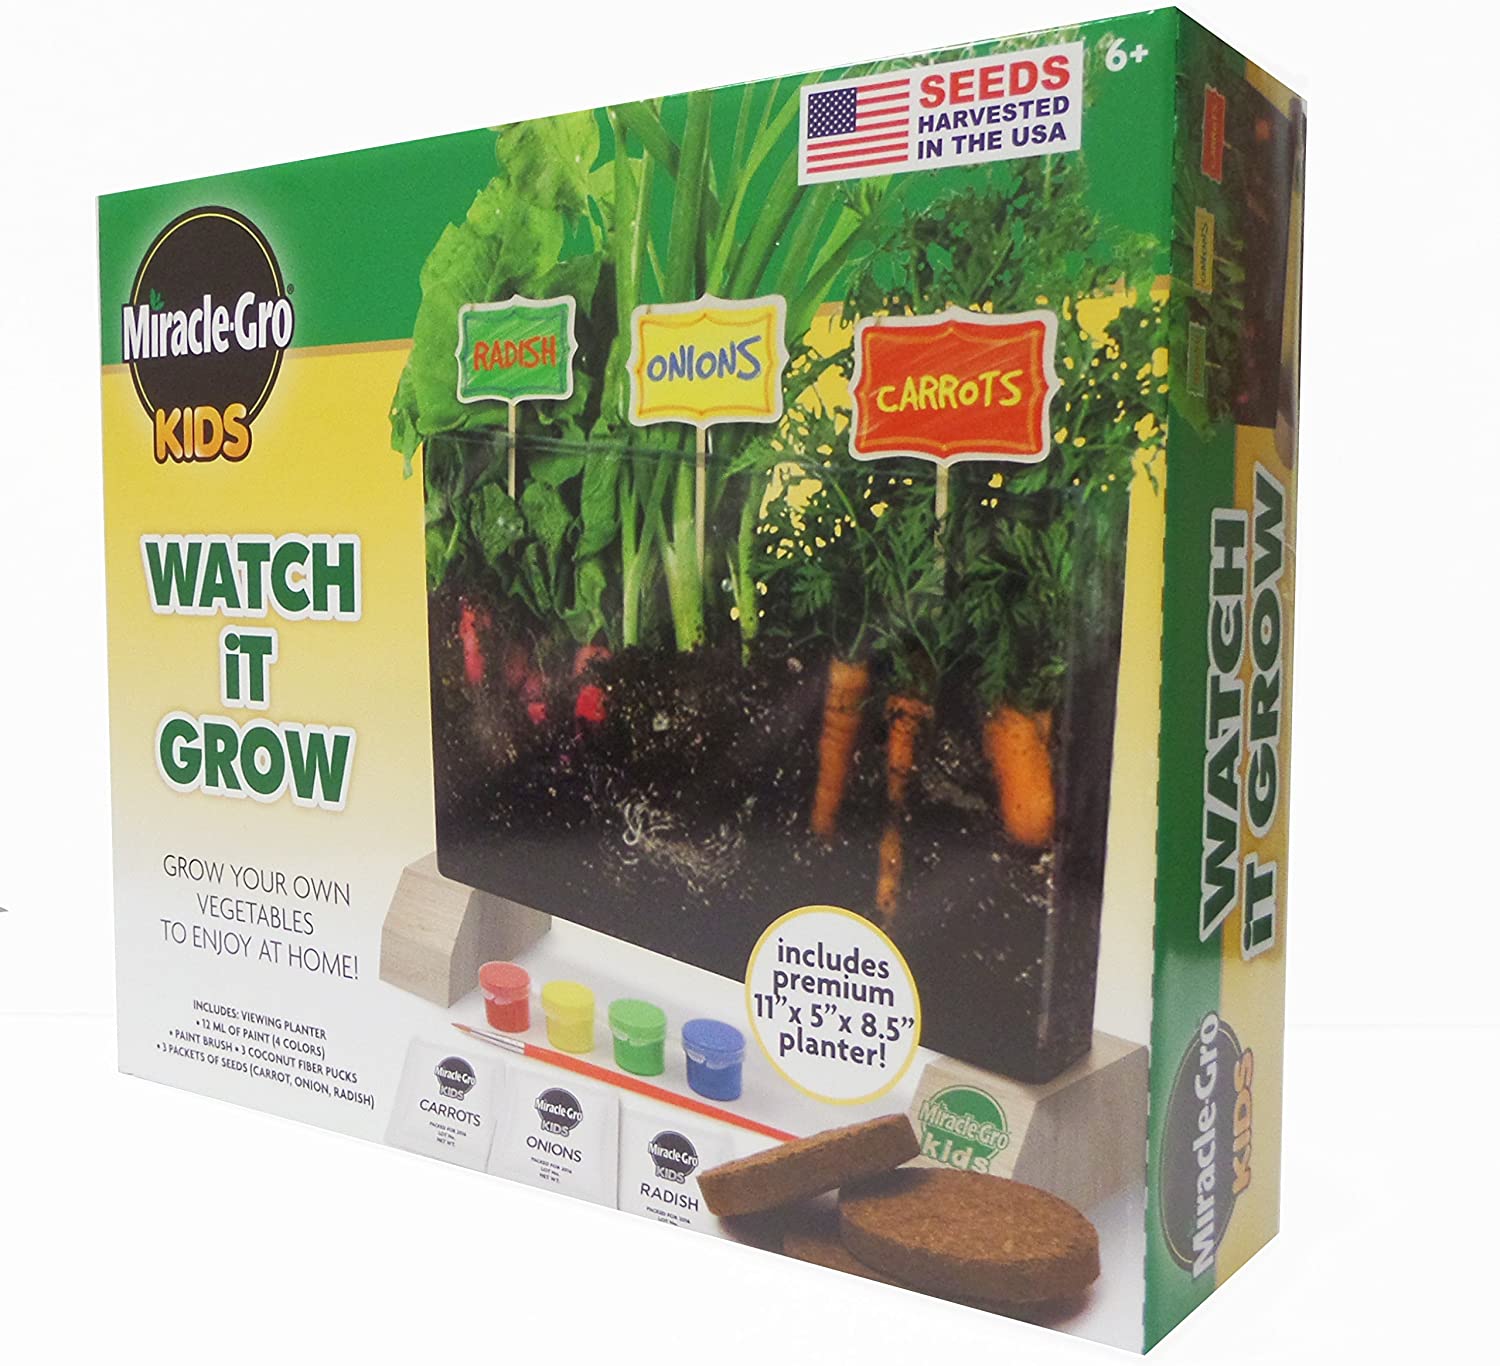 Miracle-Gro Aged 6 Plus Kids Watch It Grow Garden Kit